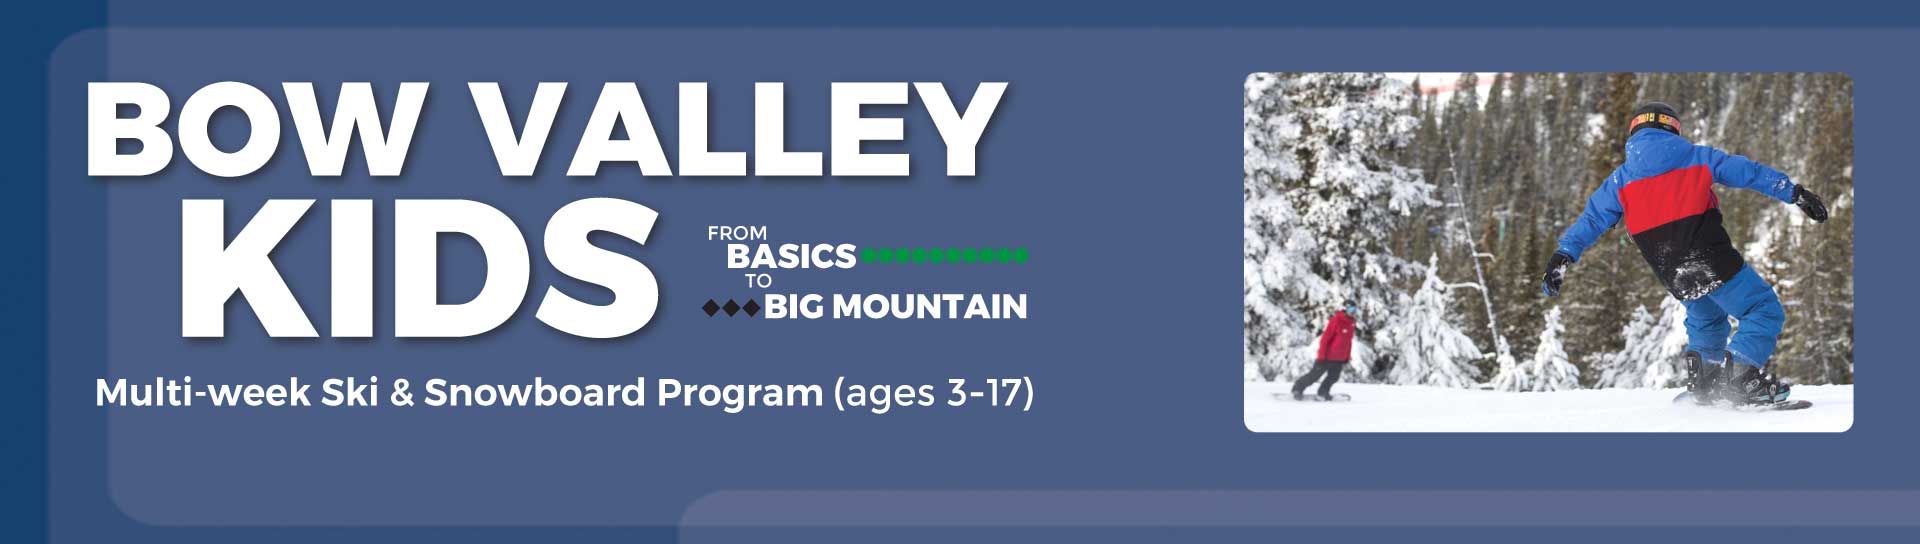 Bow Valley Kids Program